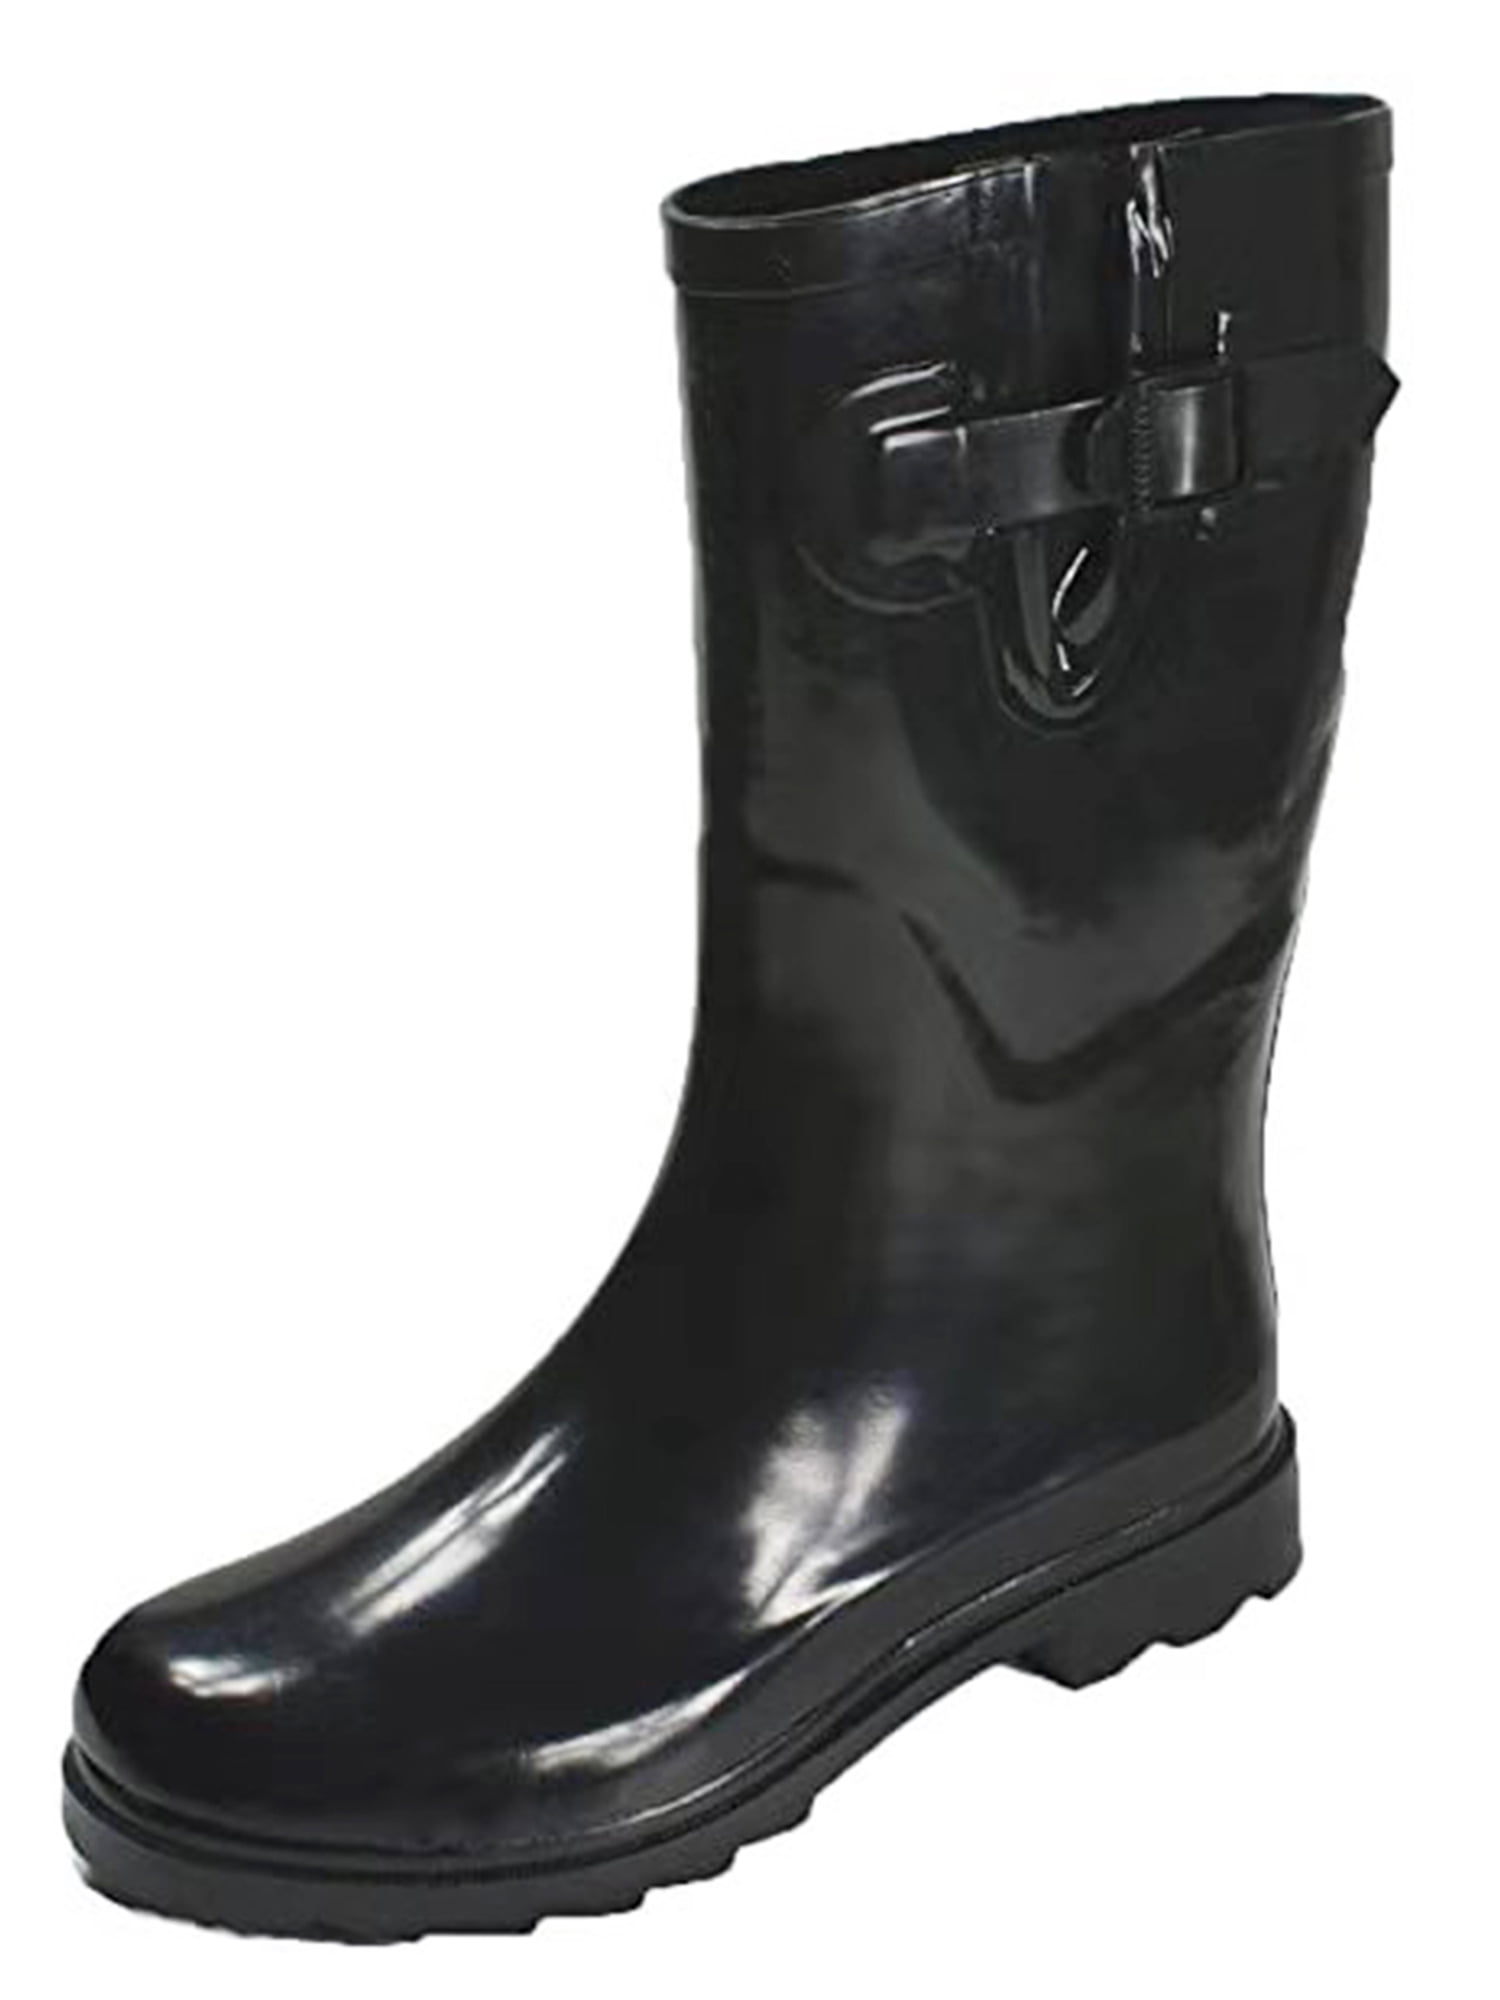 Tanleewa - Fashion Women’s Rain Boots Nonslip Rain Shoes Waterproof ...